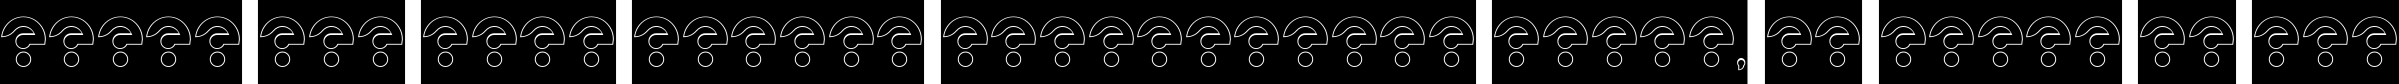 Пример написания шрифтом KIOSHIMA-Outlined-Inverse текста на русском